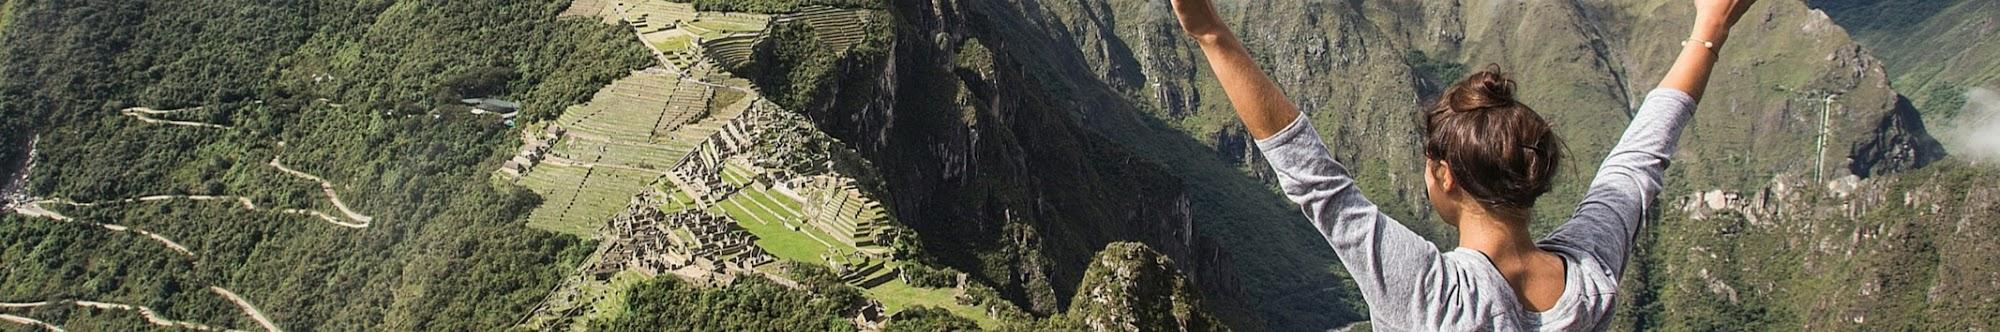 Peru For Less